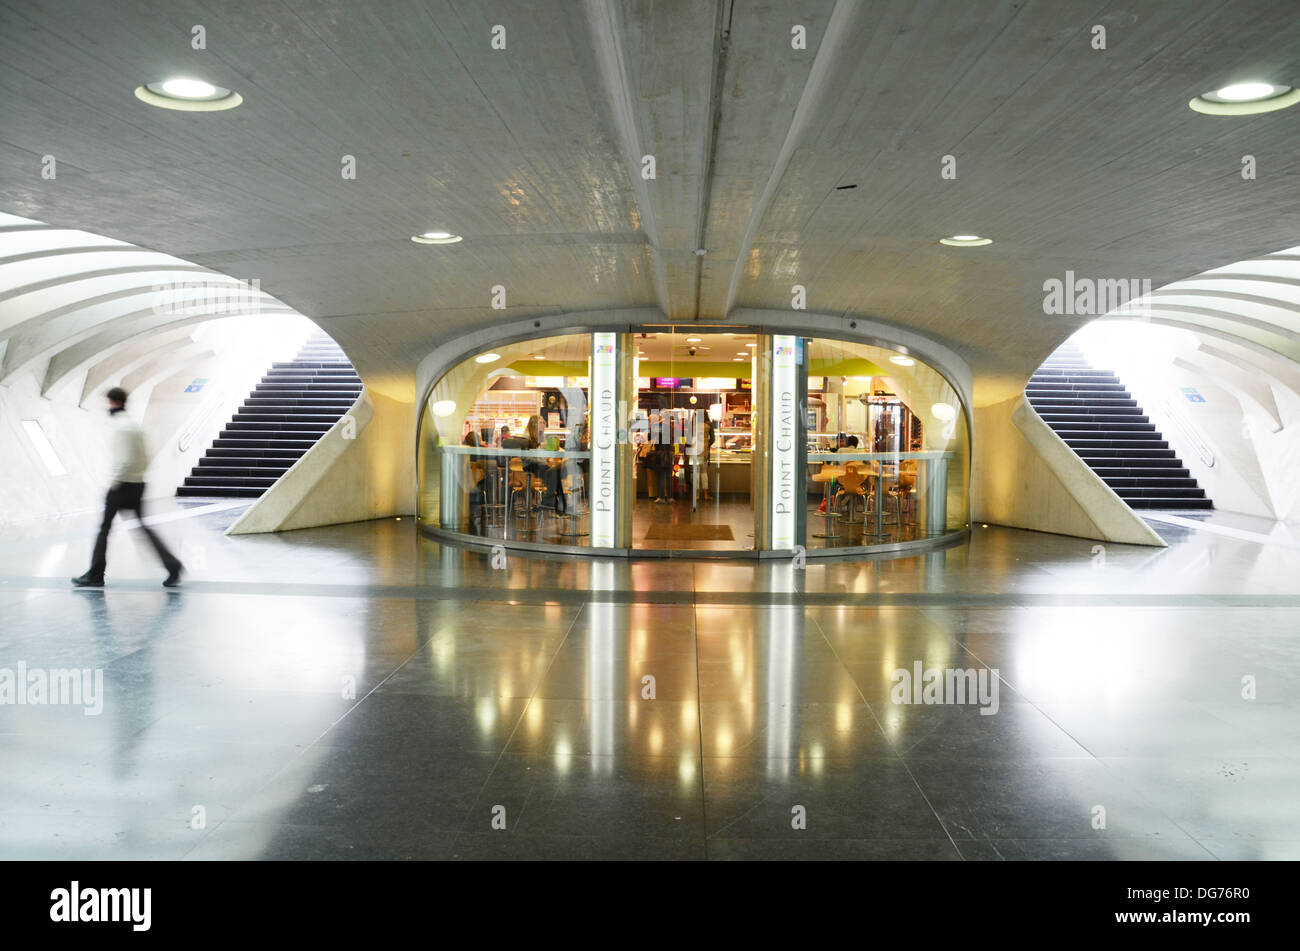 shops at Liege-Guillemins railway station designed by architect Santiago Calatrava in Liege Belgium Stock Photo